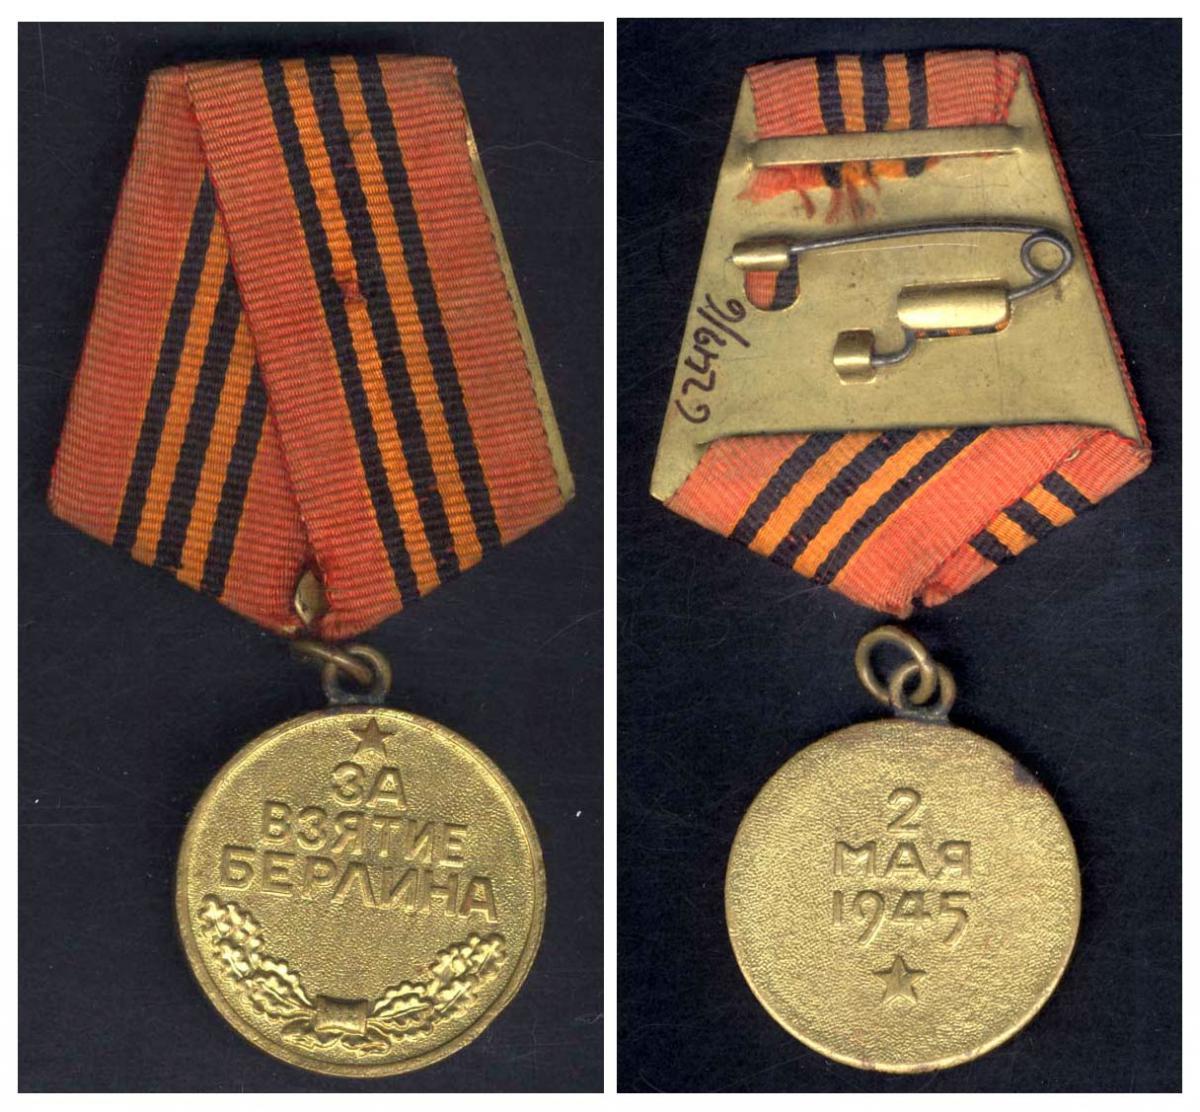 Medal received by Ernestina-Yadja Krakowiak  for service in the battle for Berlin